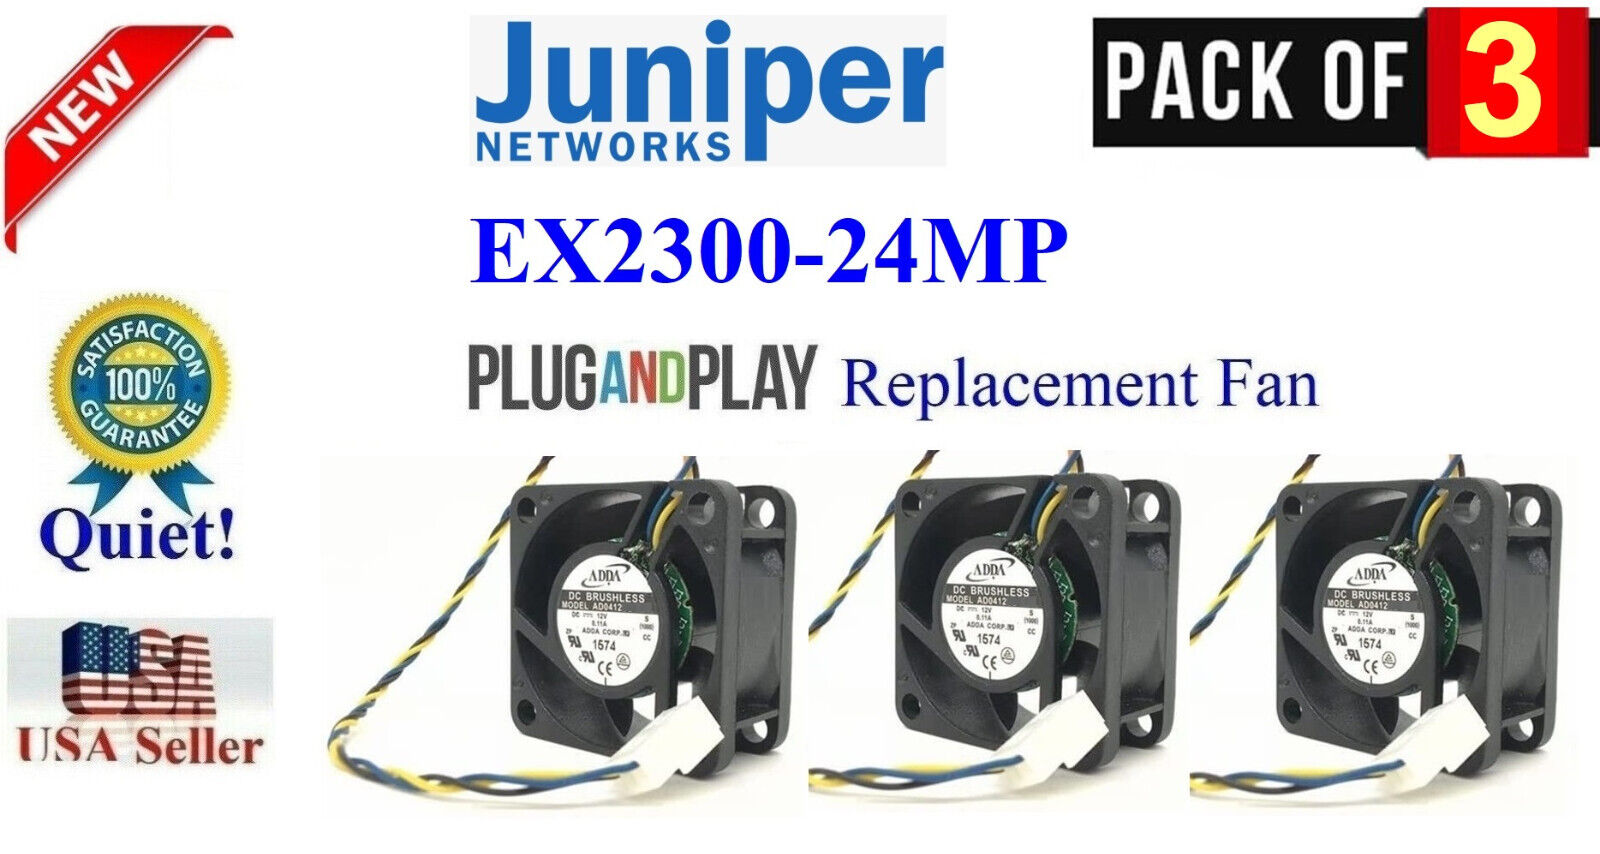 3x Quiet Replacement Fans for Juniper Networks EX2300-24MP